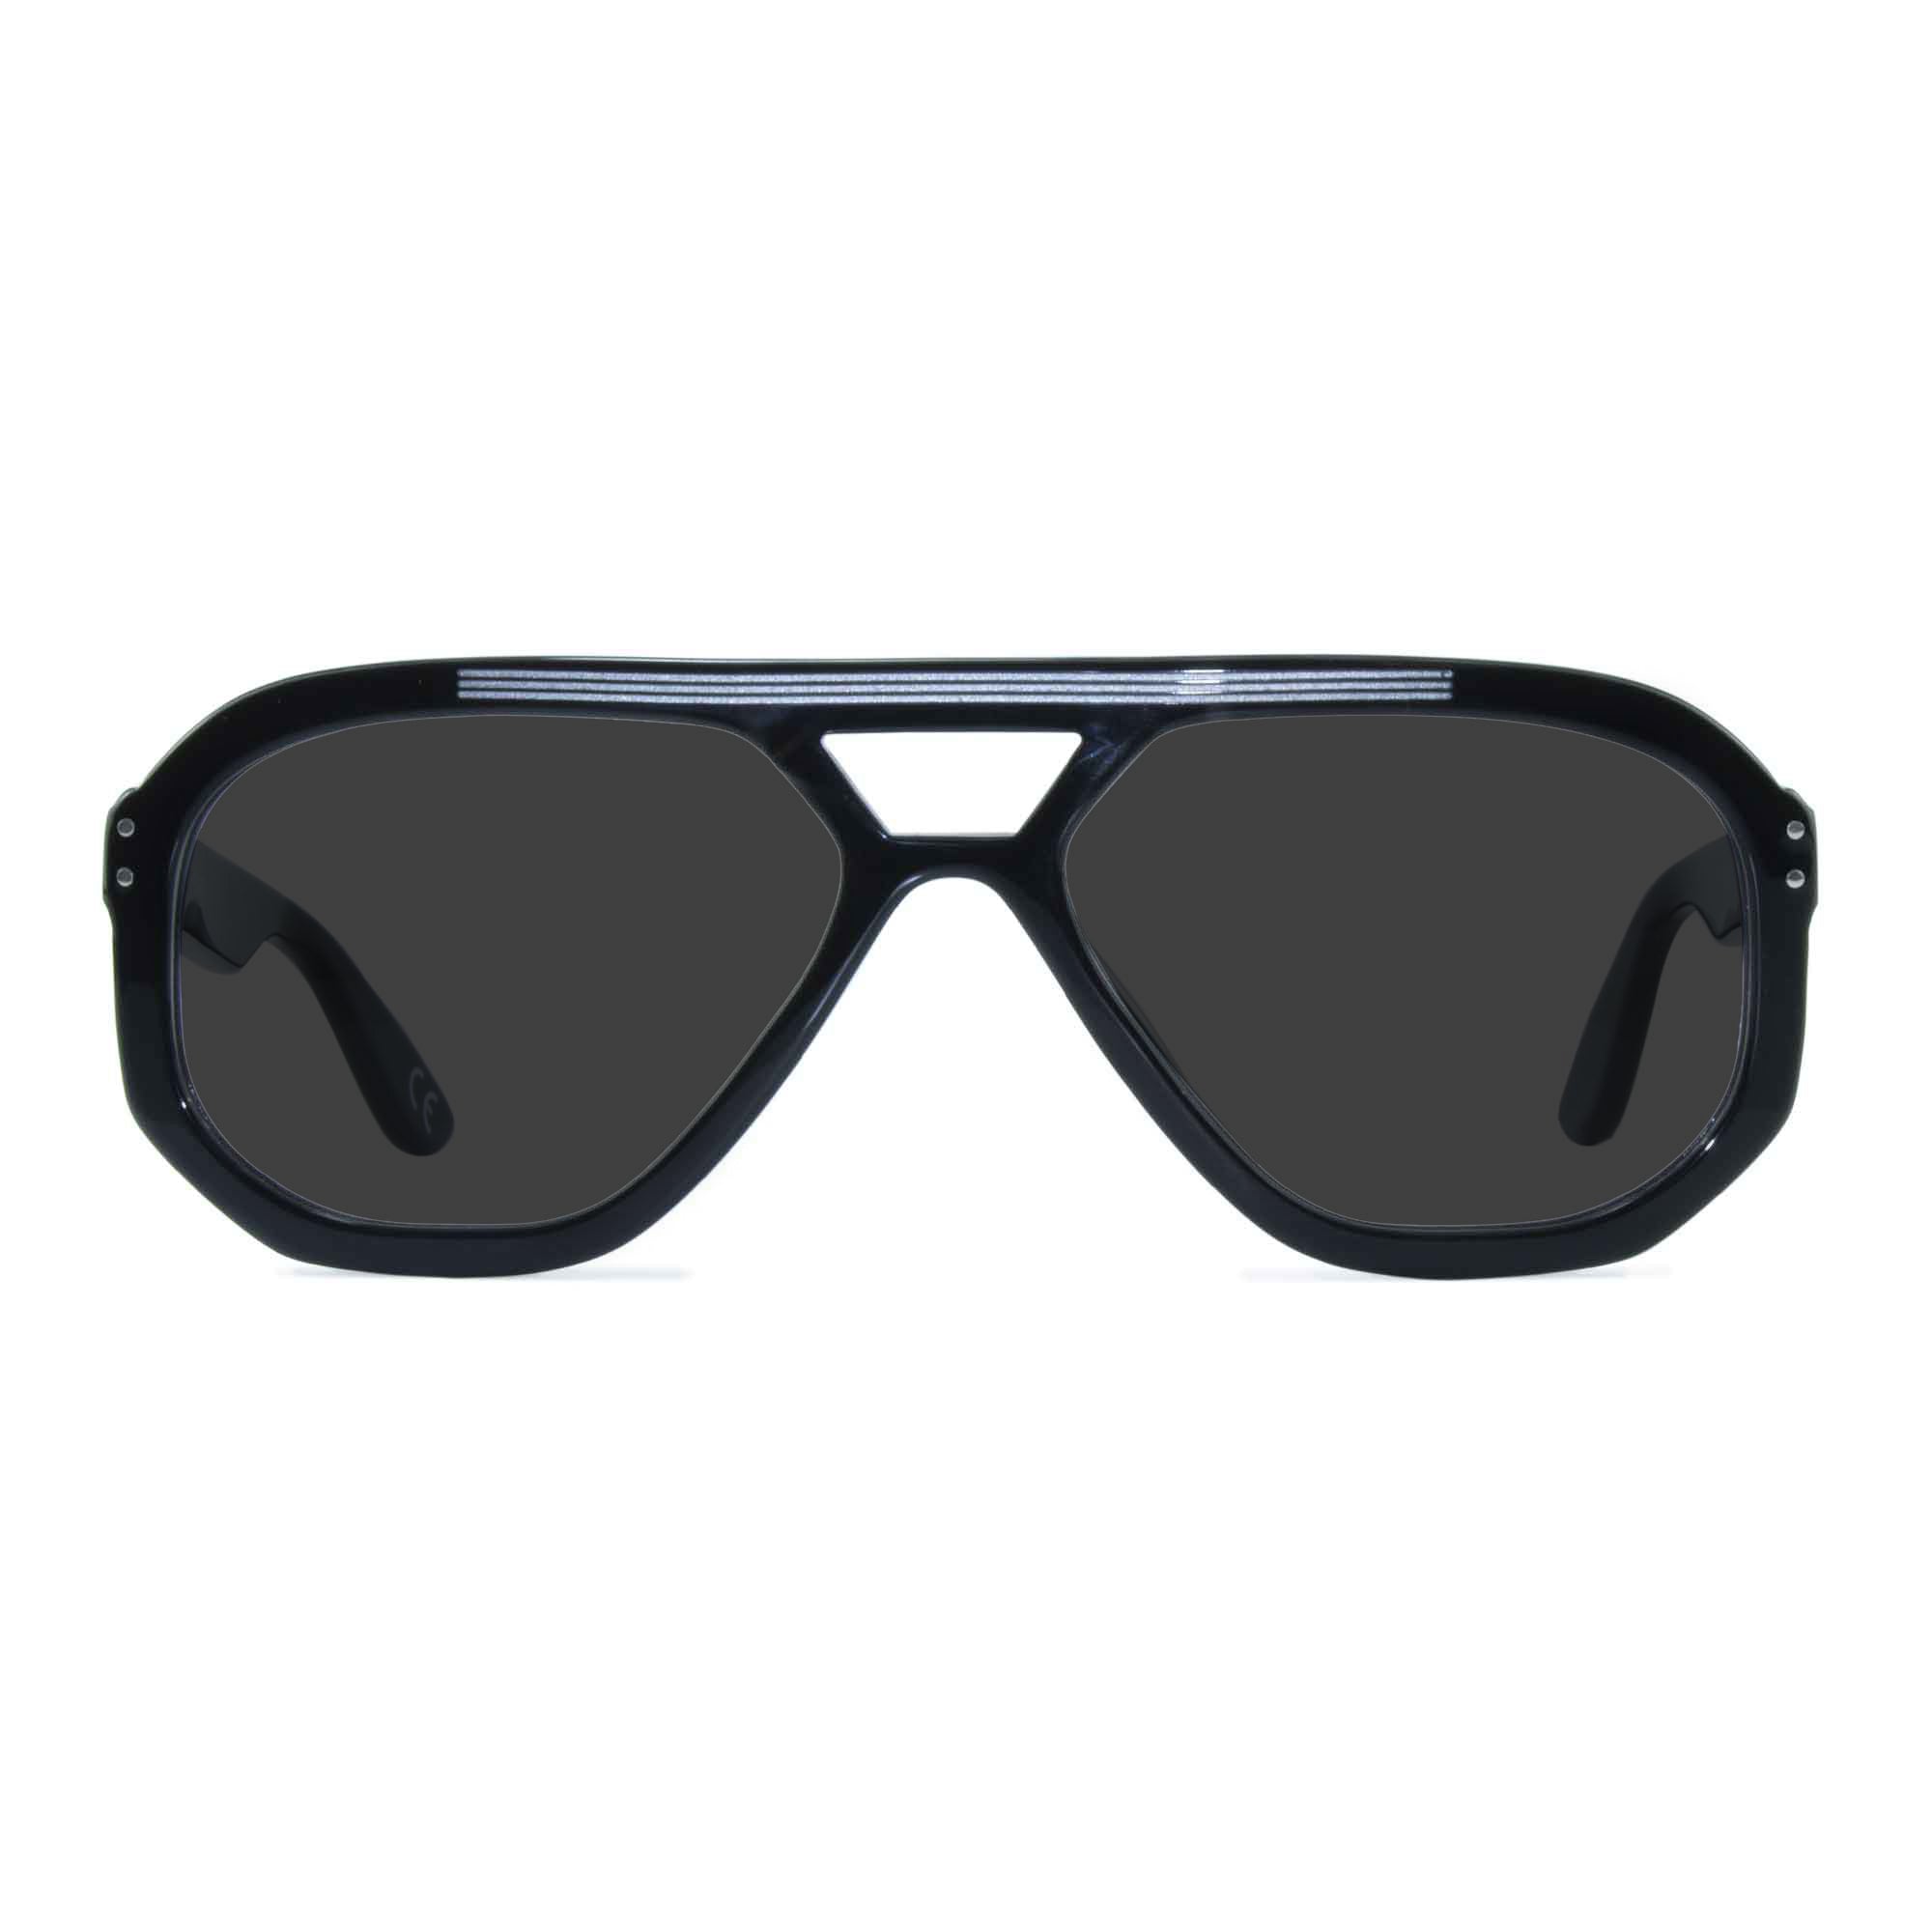 jim black navigator sunglasses